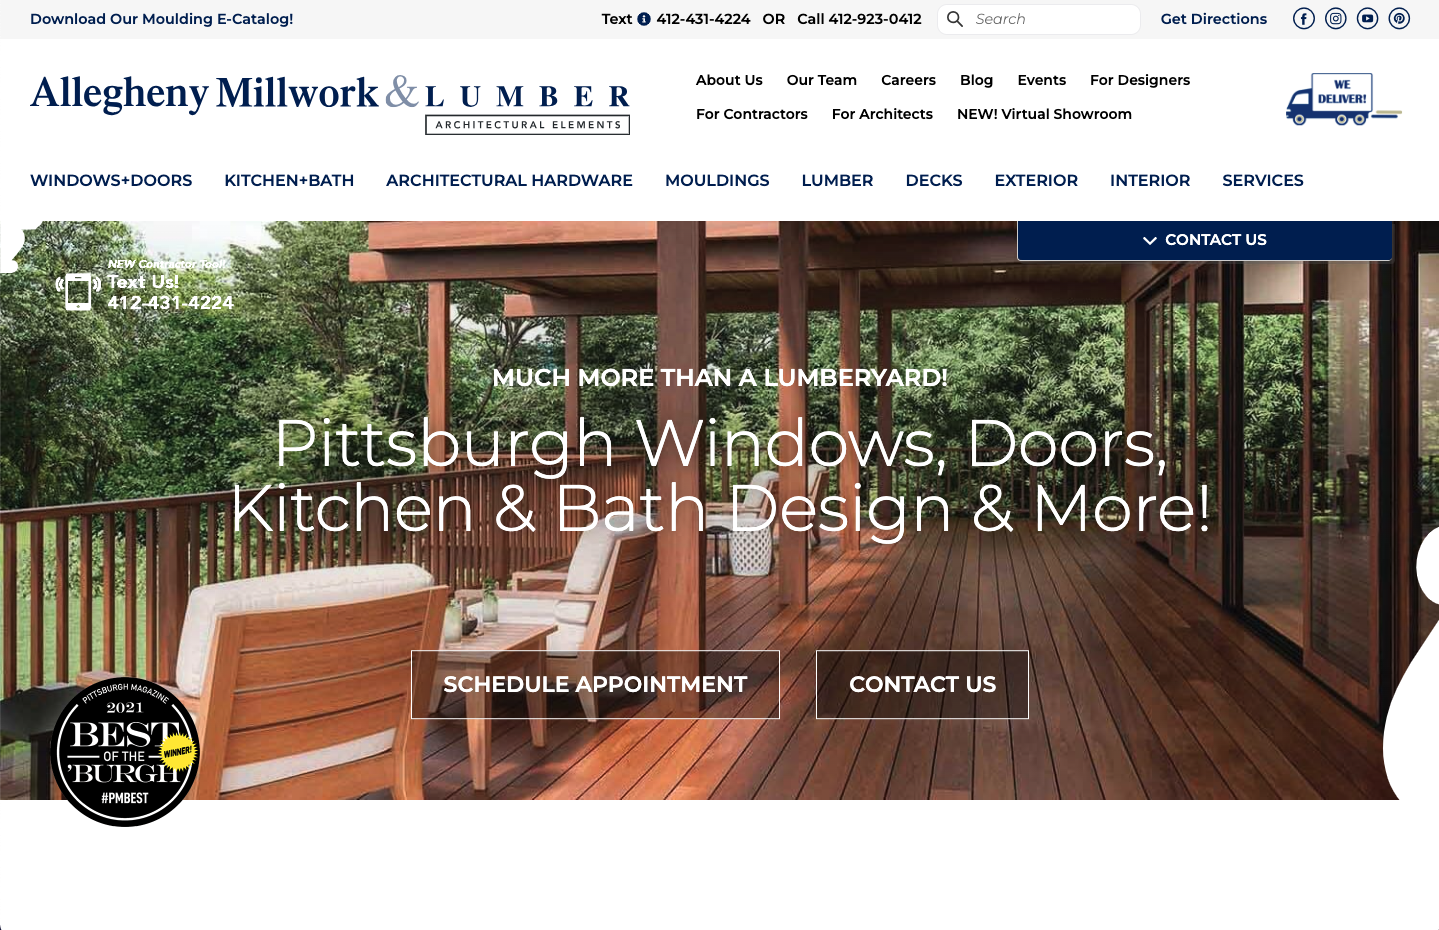 Allegheny Millwork & Lumber New Award-Winning Website